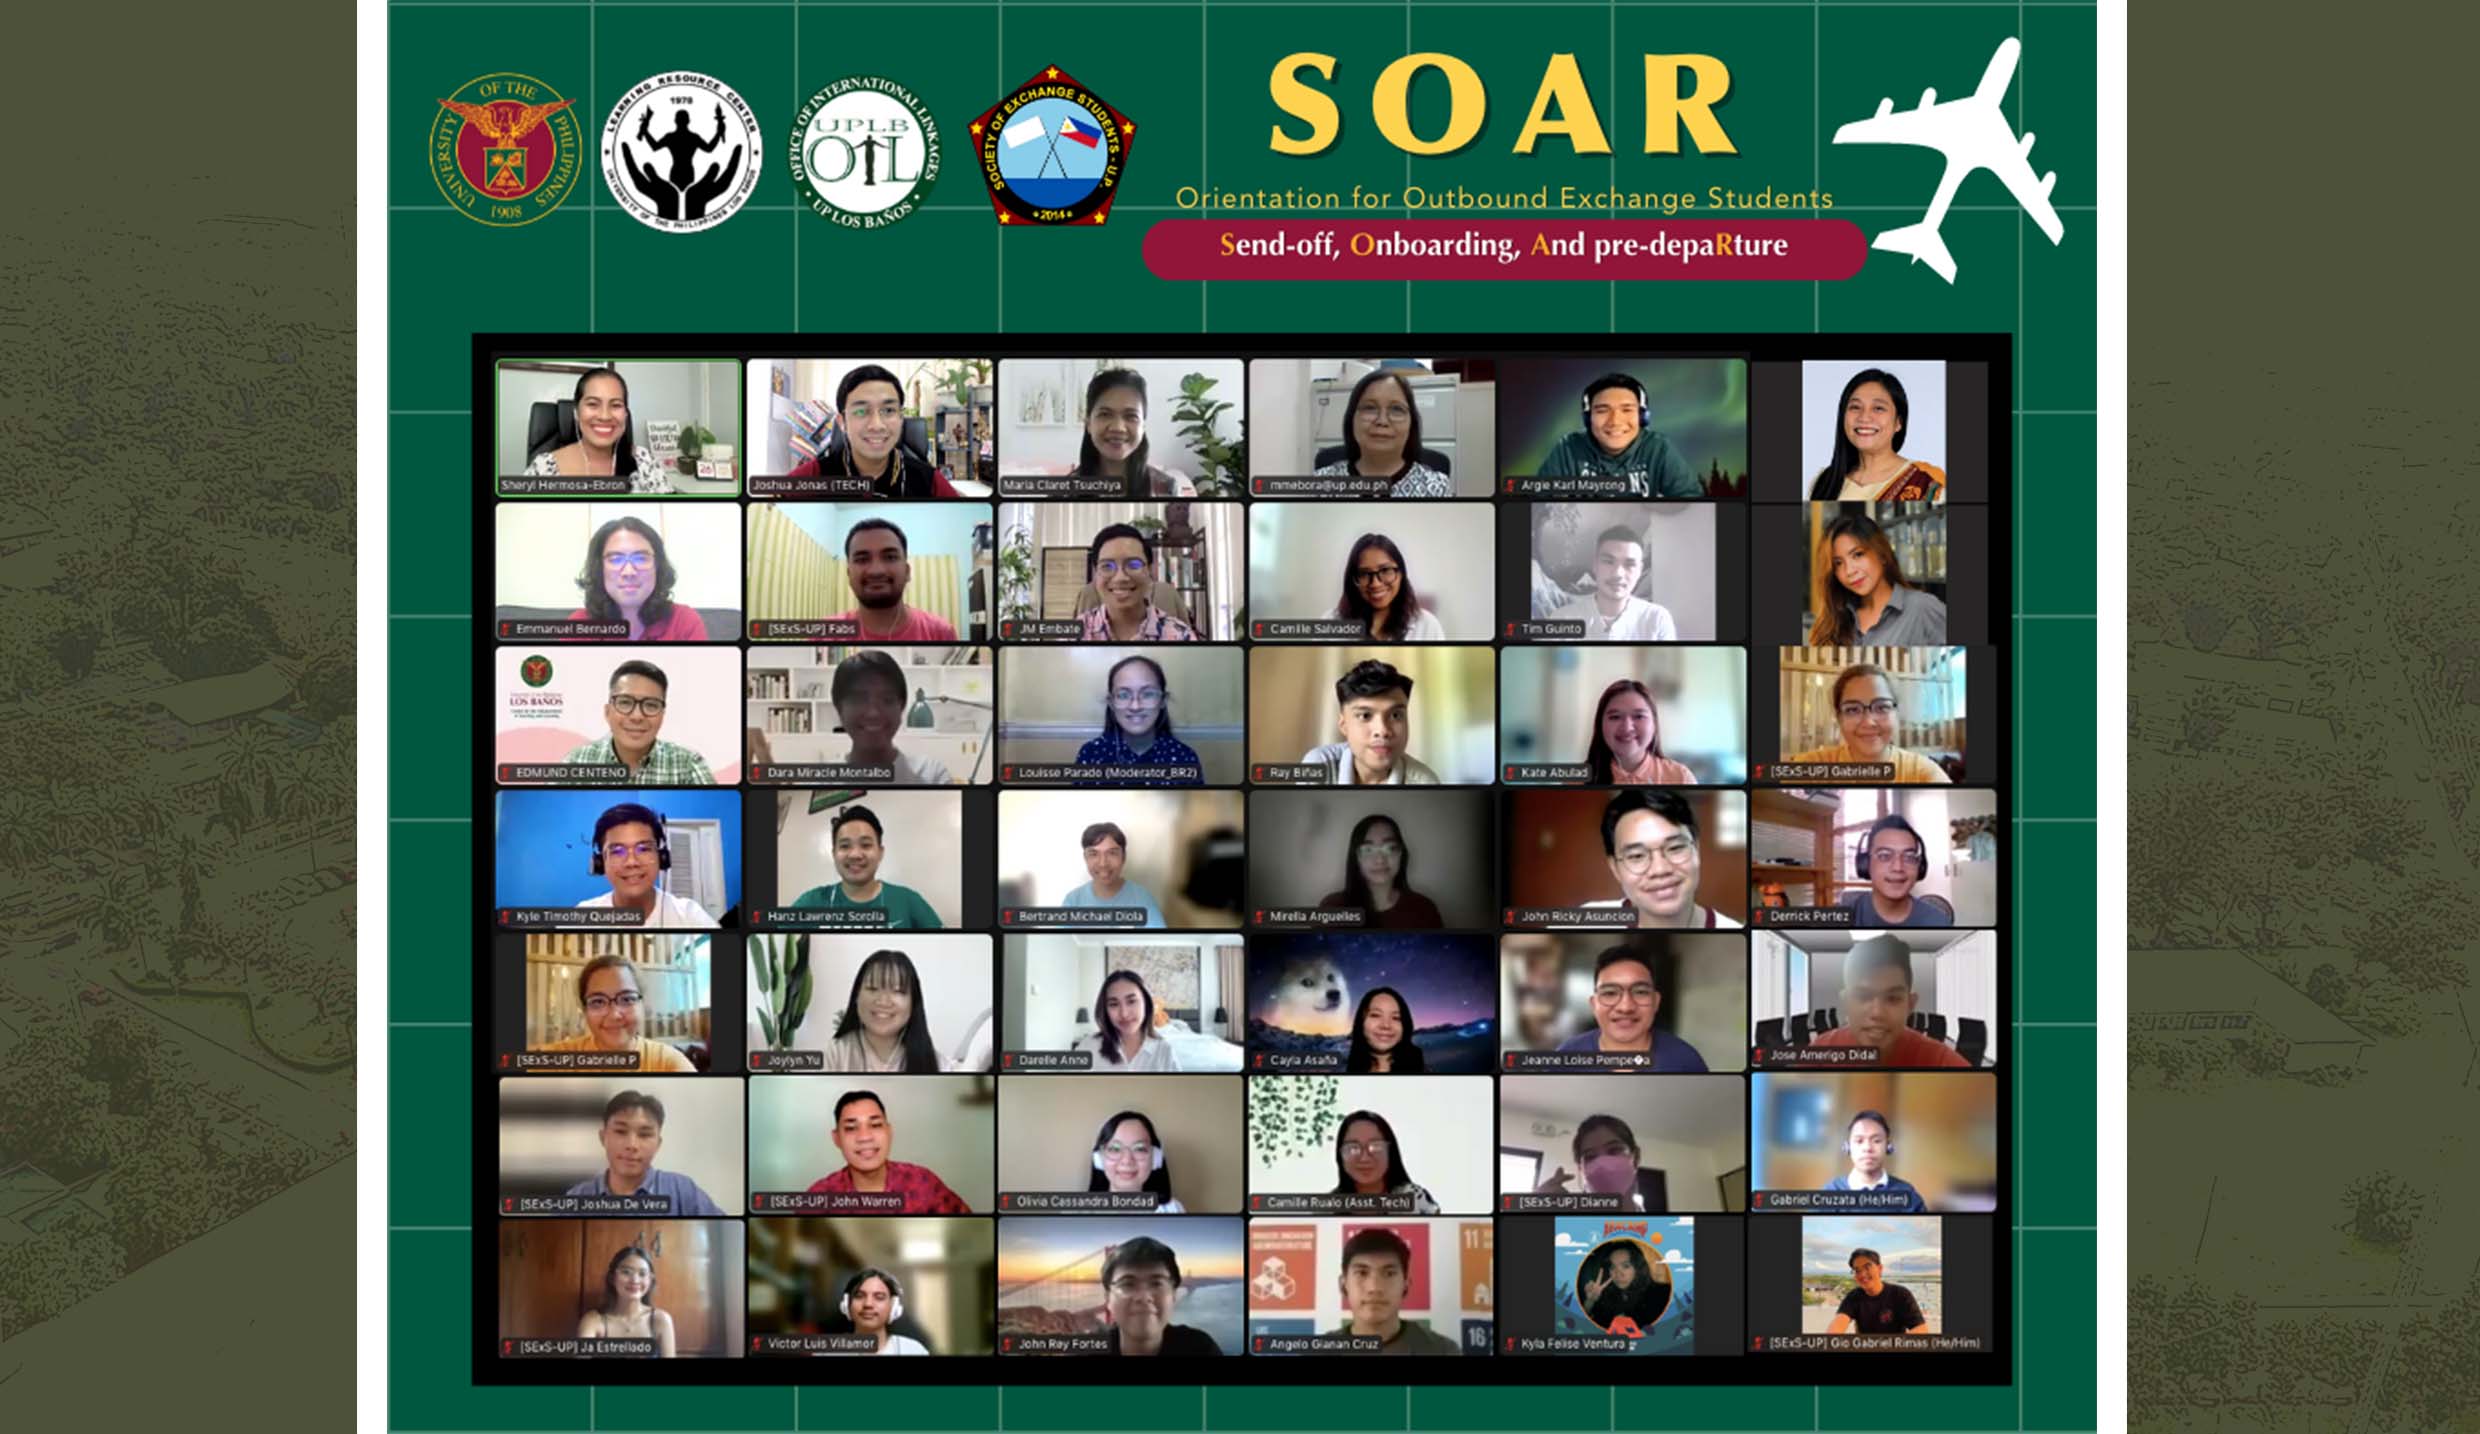 Outbound exchange students attend SOAR Orientation